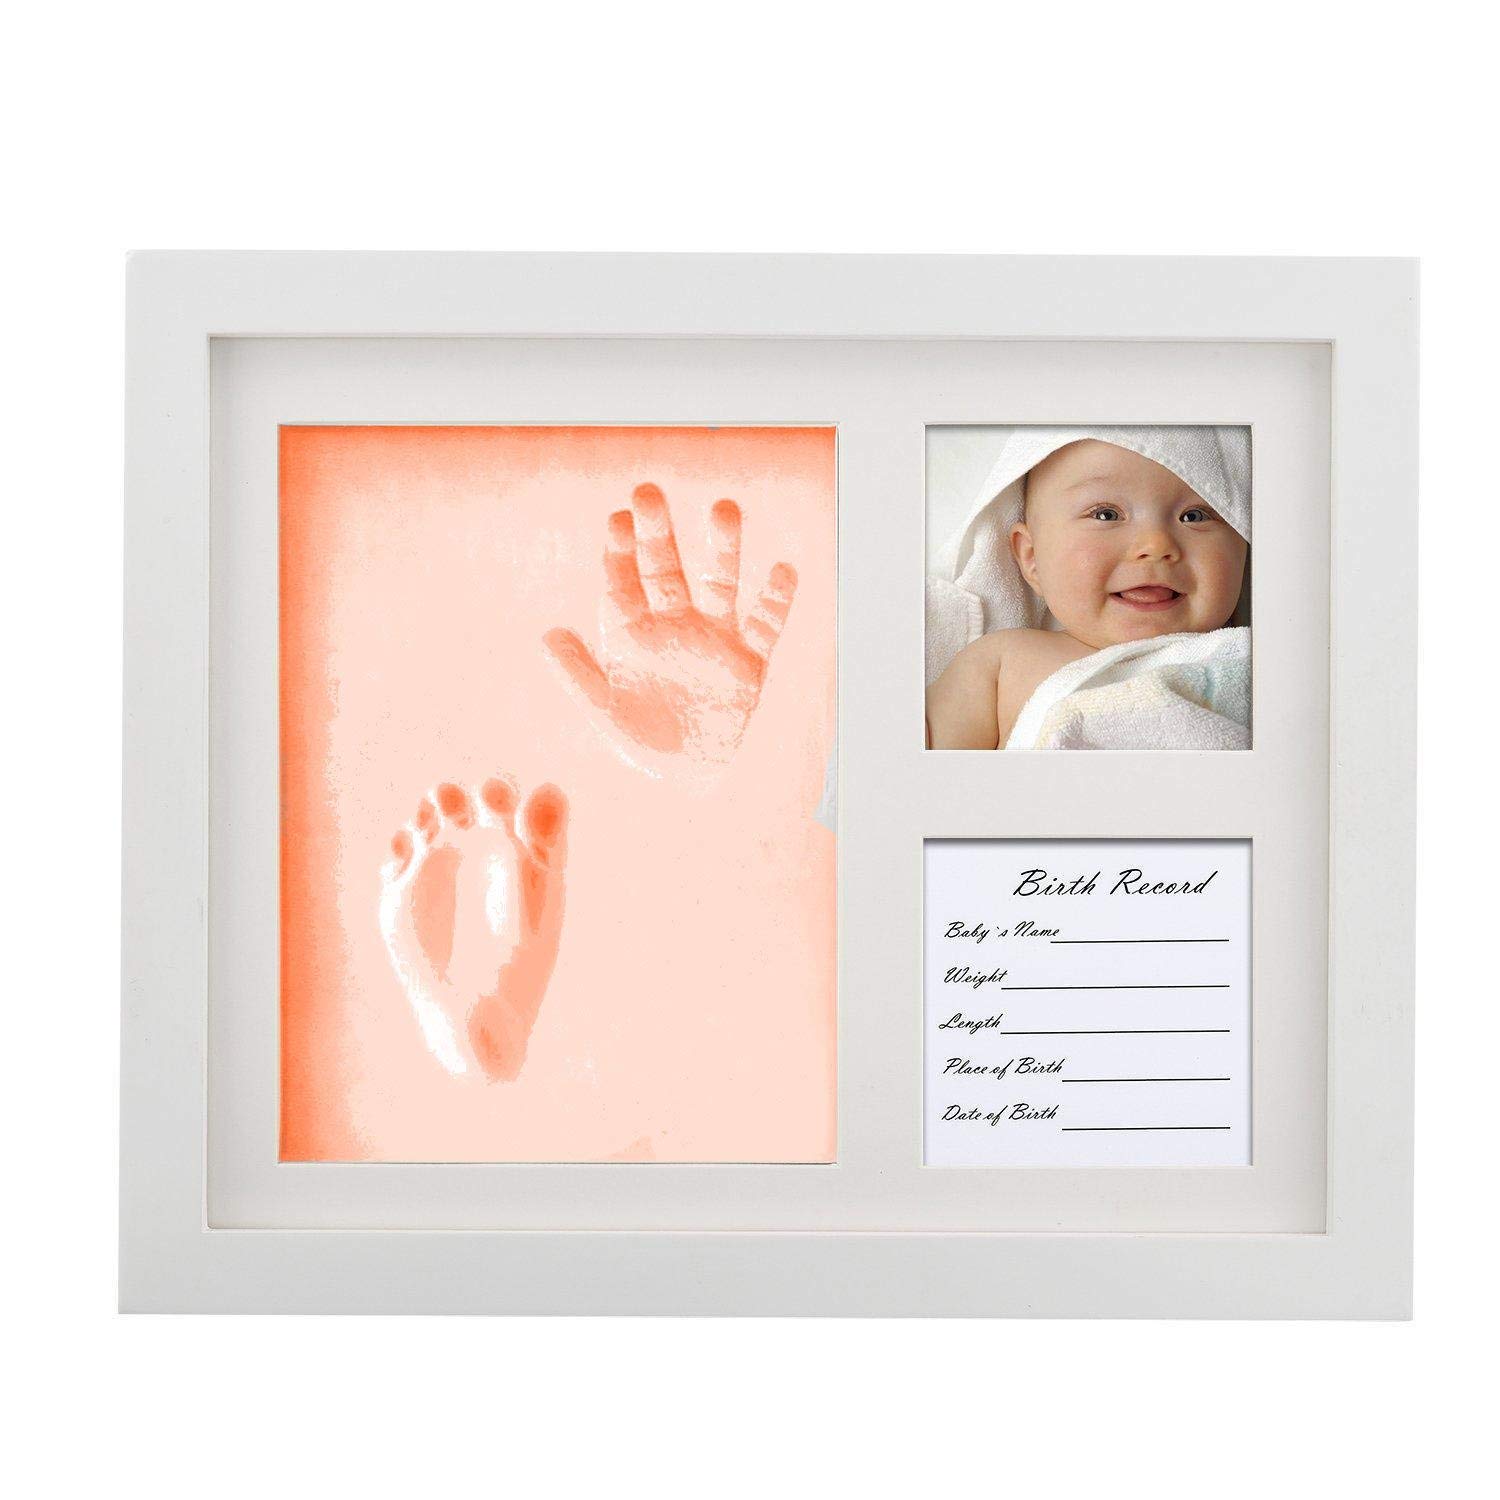 Frame Photos Footprint Baby Photo